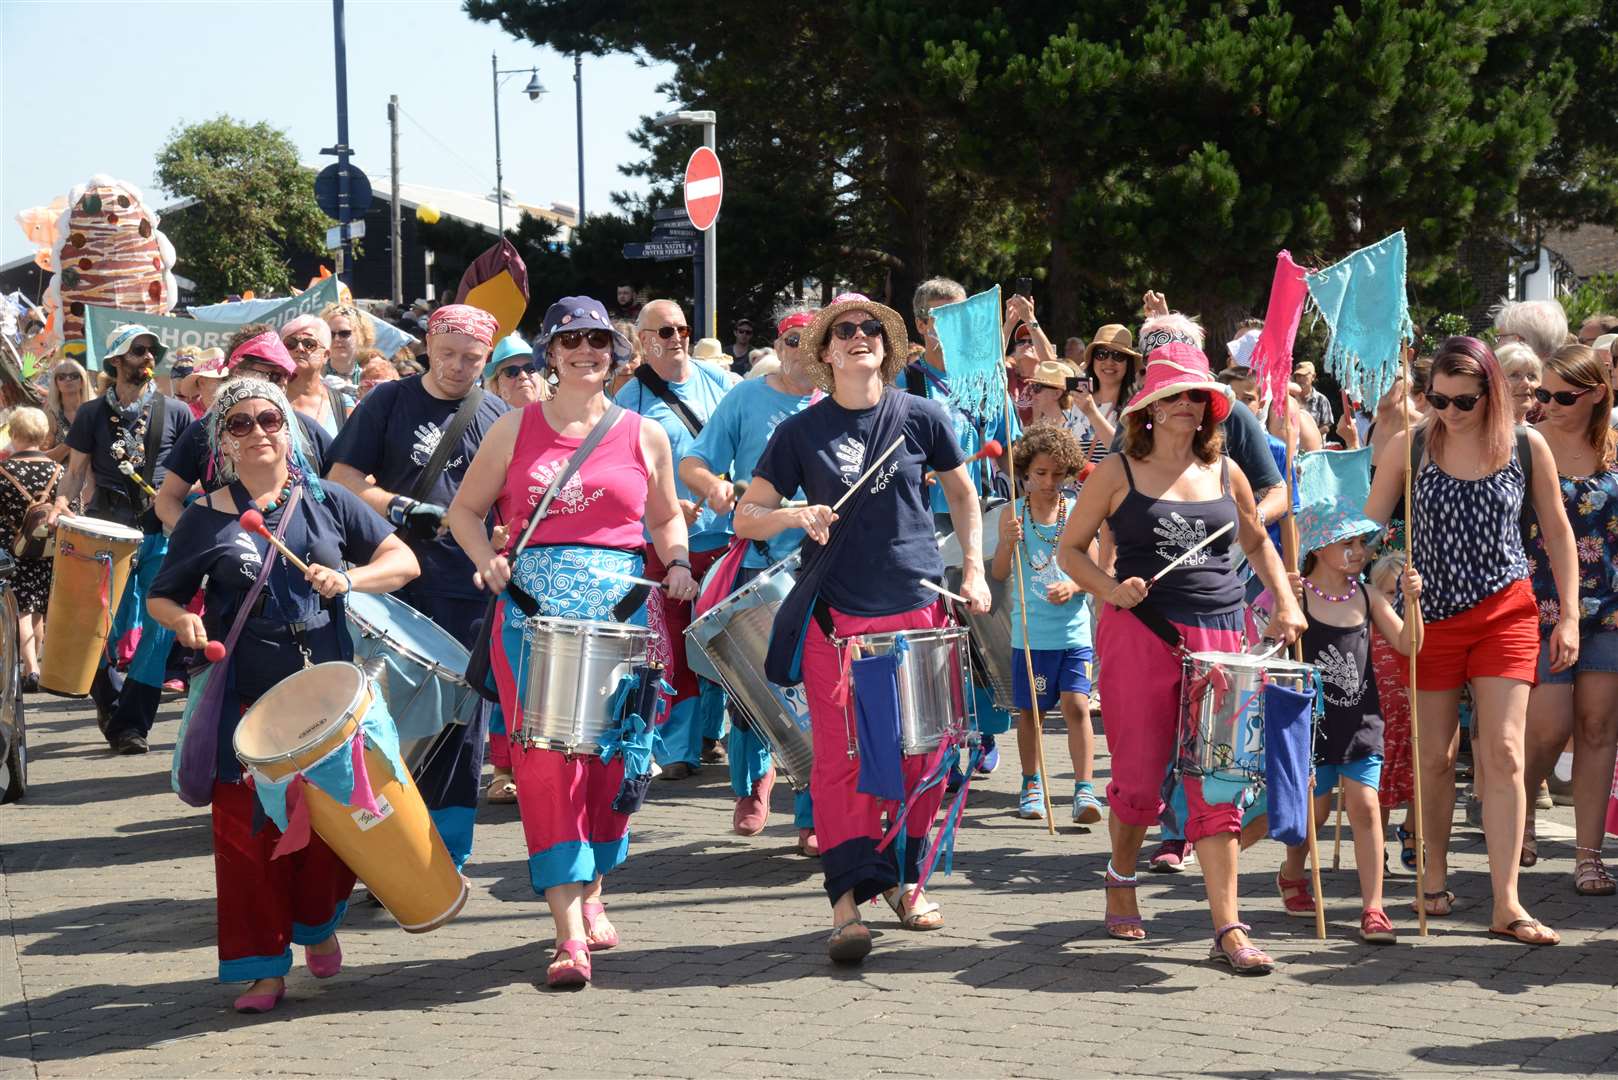 Samba Pelo Mar led last year's Oyster Parade through the town